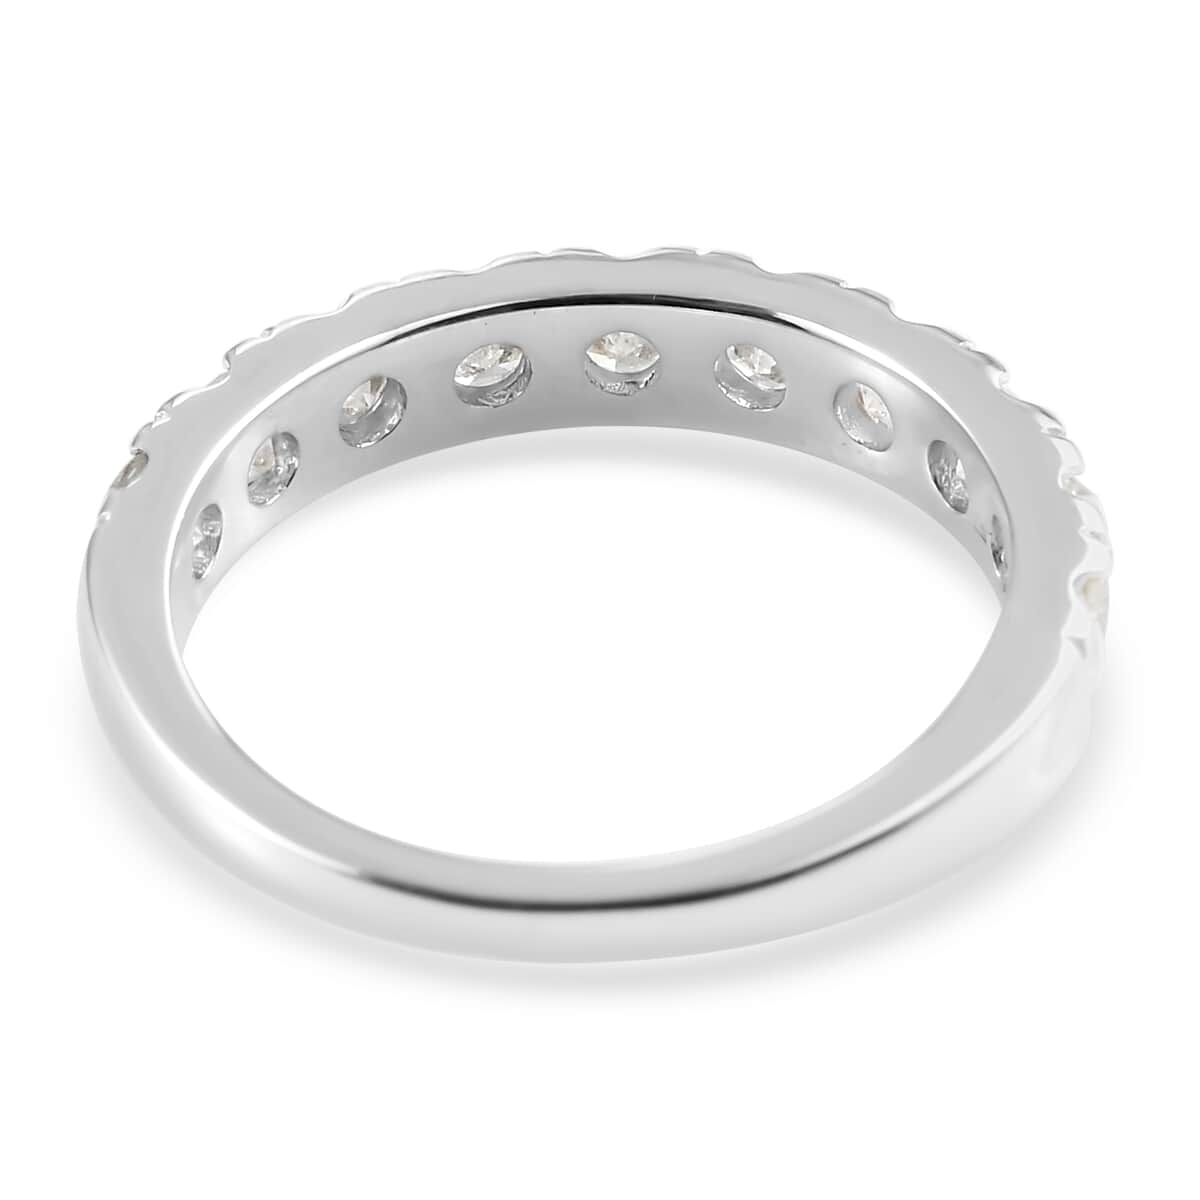 LUXORO 10K White Gold G-H I2 Diamond Band Ring (Size 6.0) 2.50 Grams 1.00 ctw image number 4